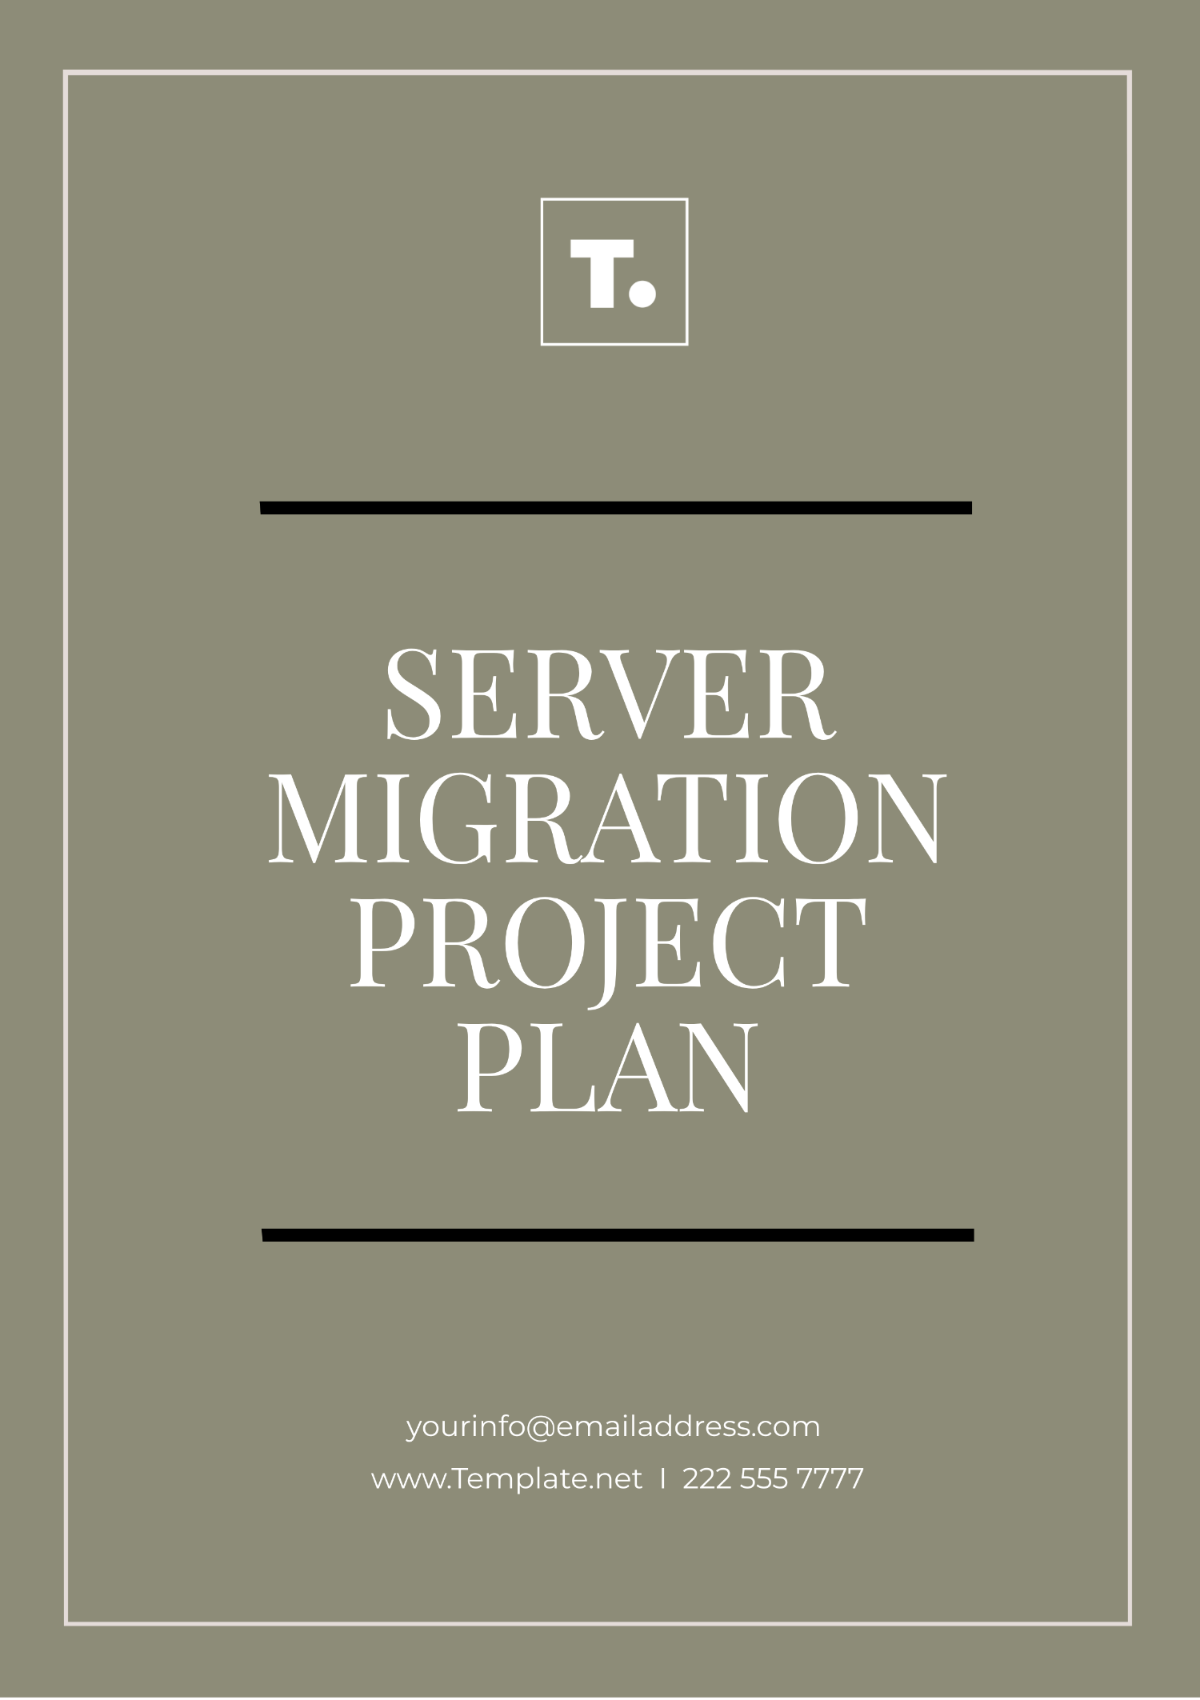 Server Migration Project Plan Template